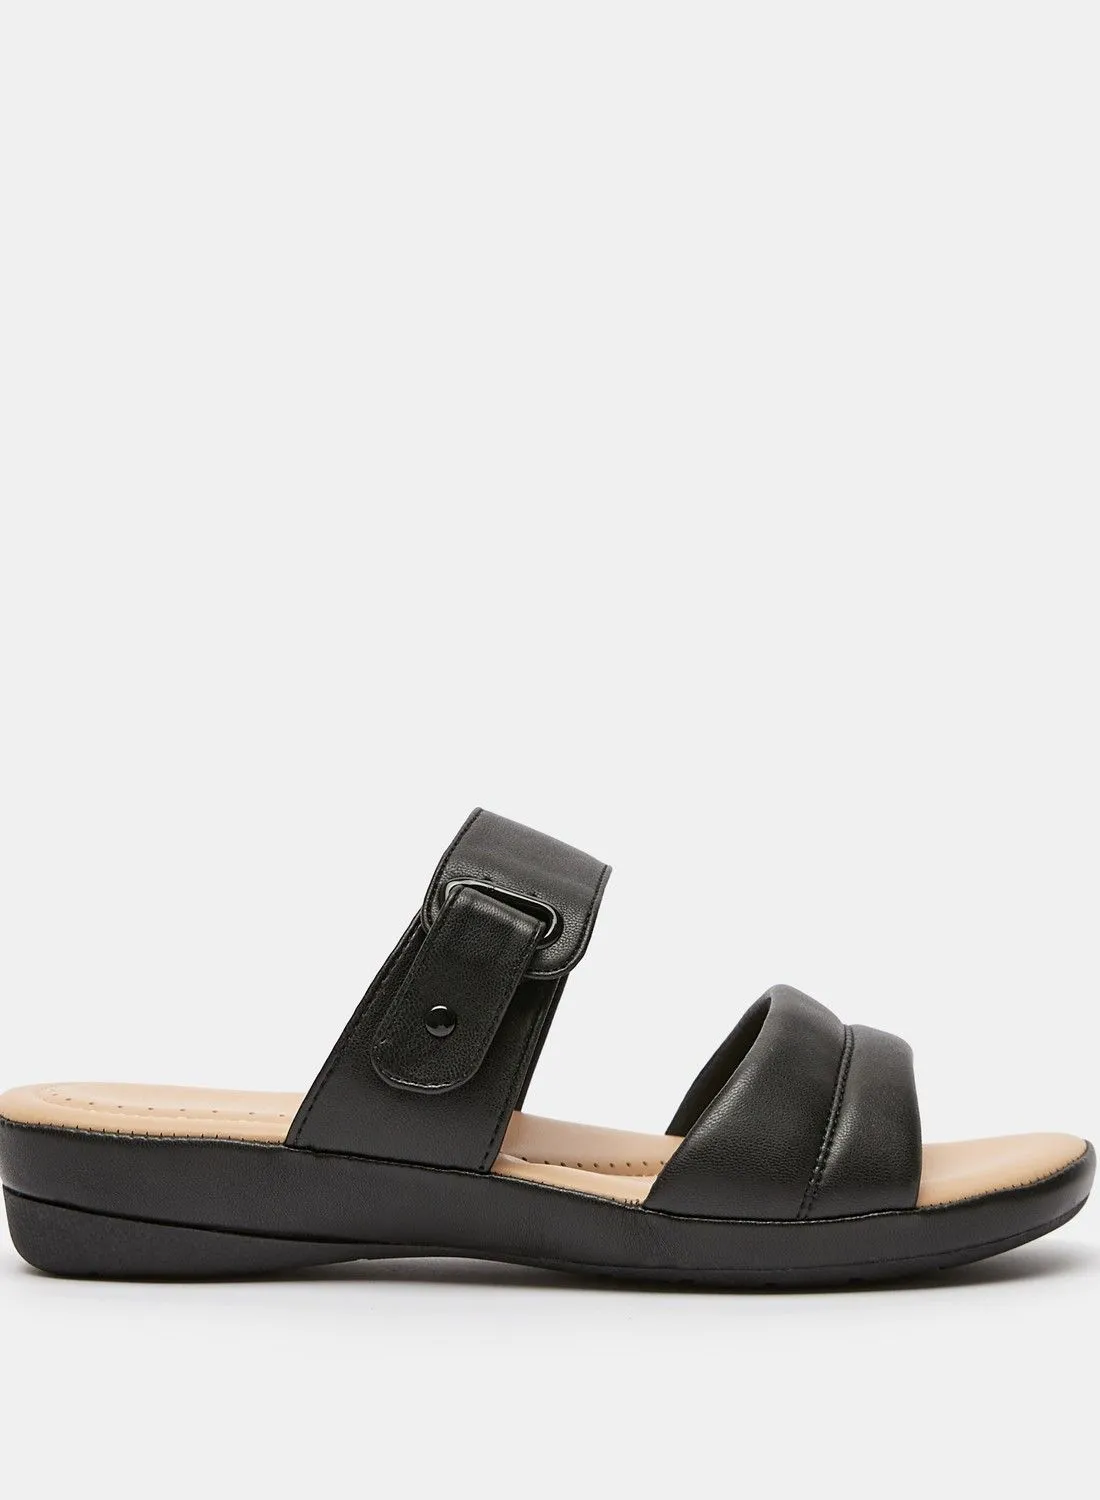 Le Confort Le Confort Slip-On Slide Sandals with Buckle Detail